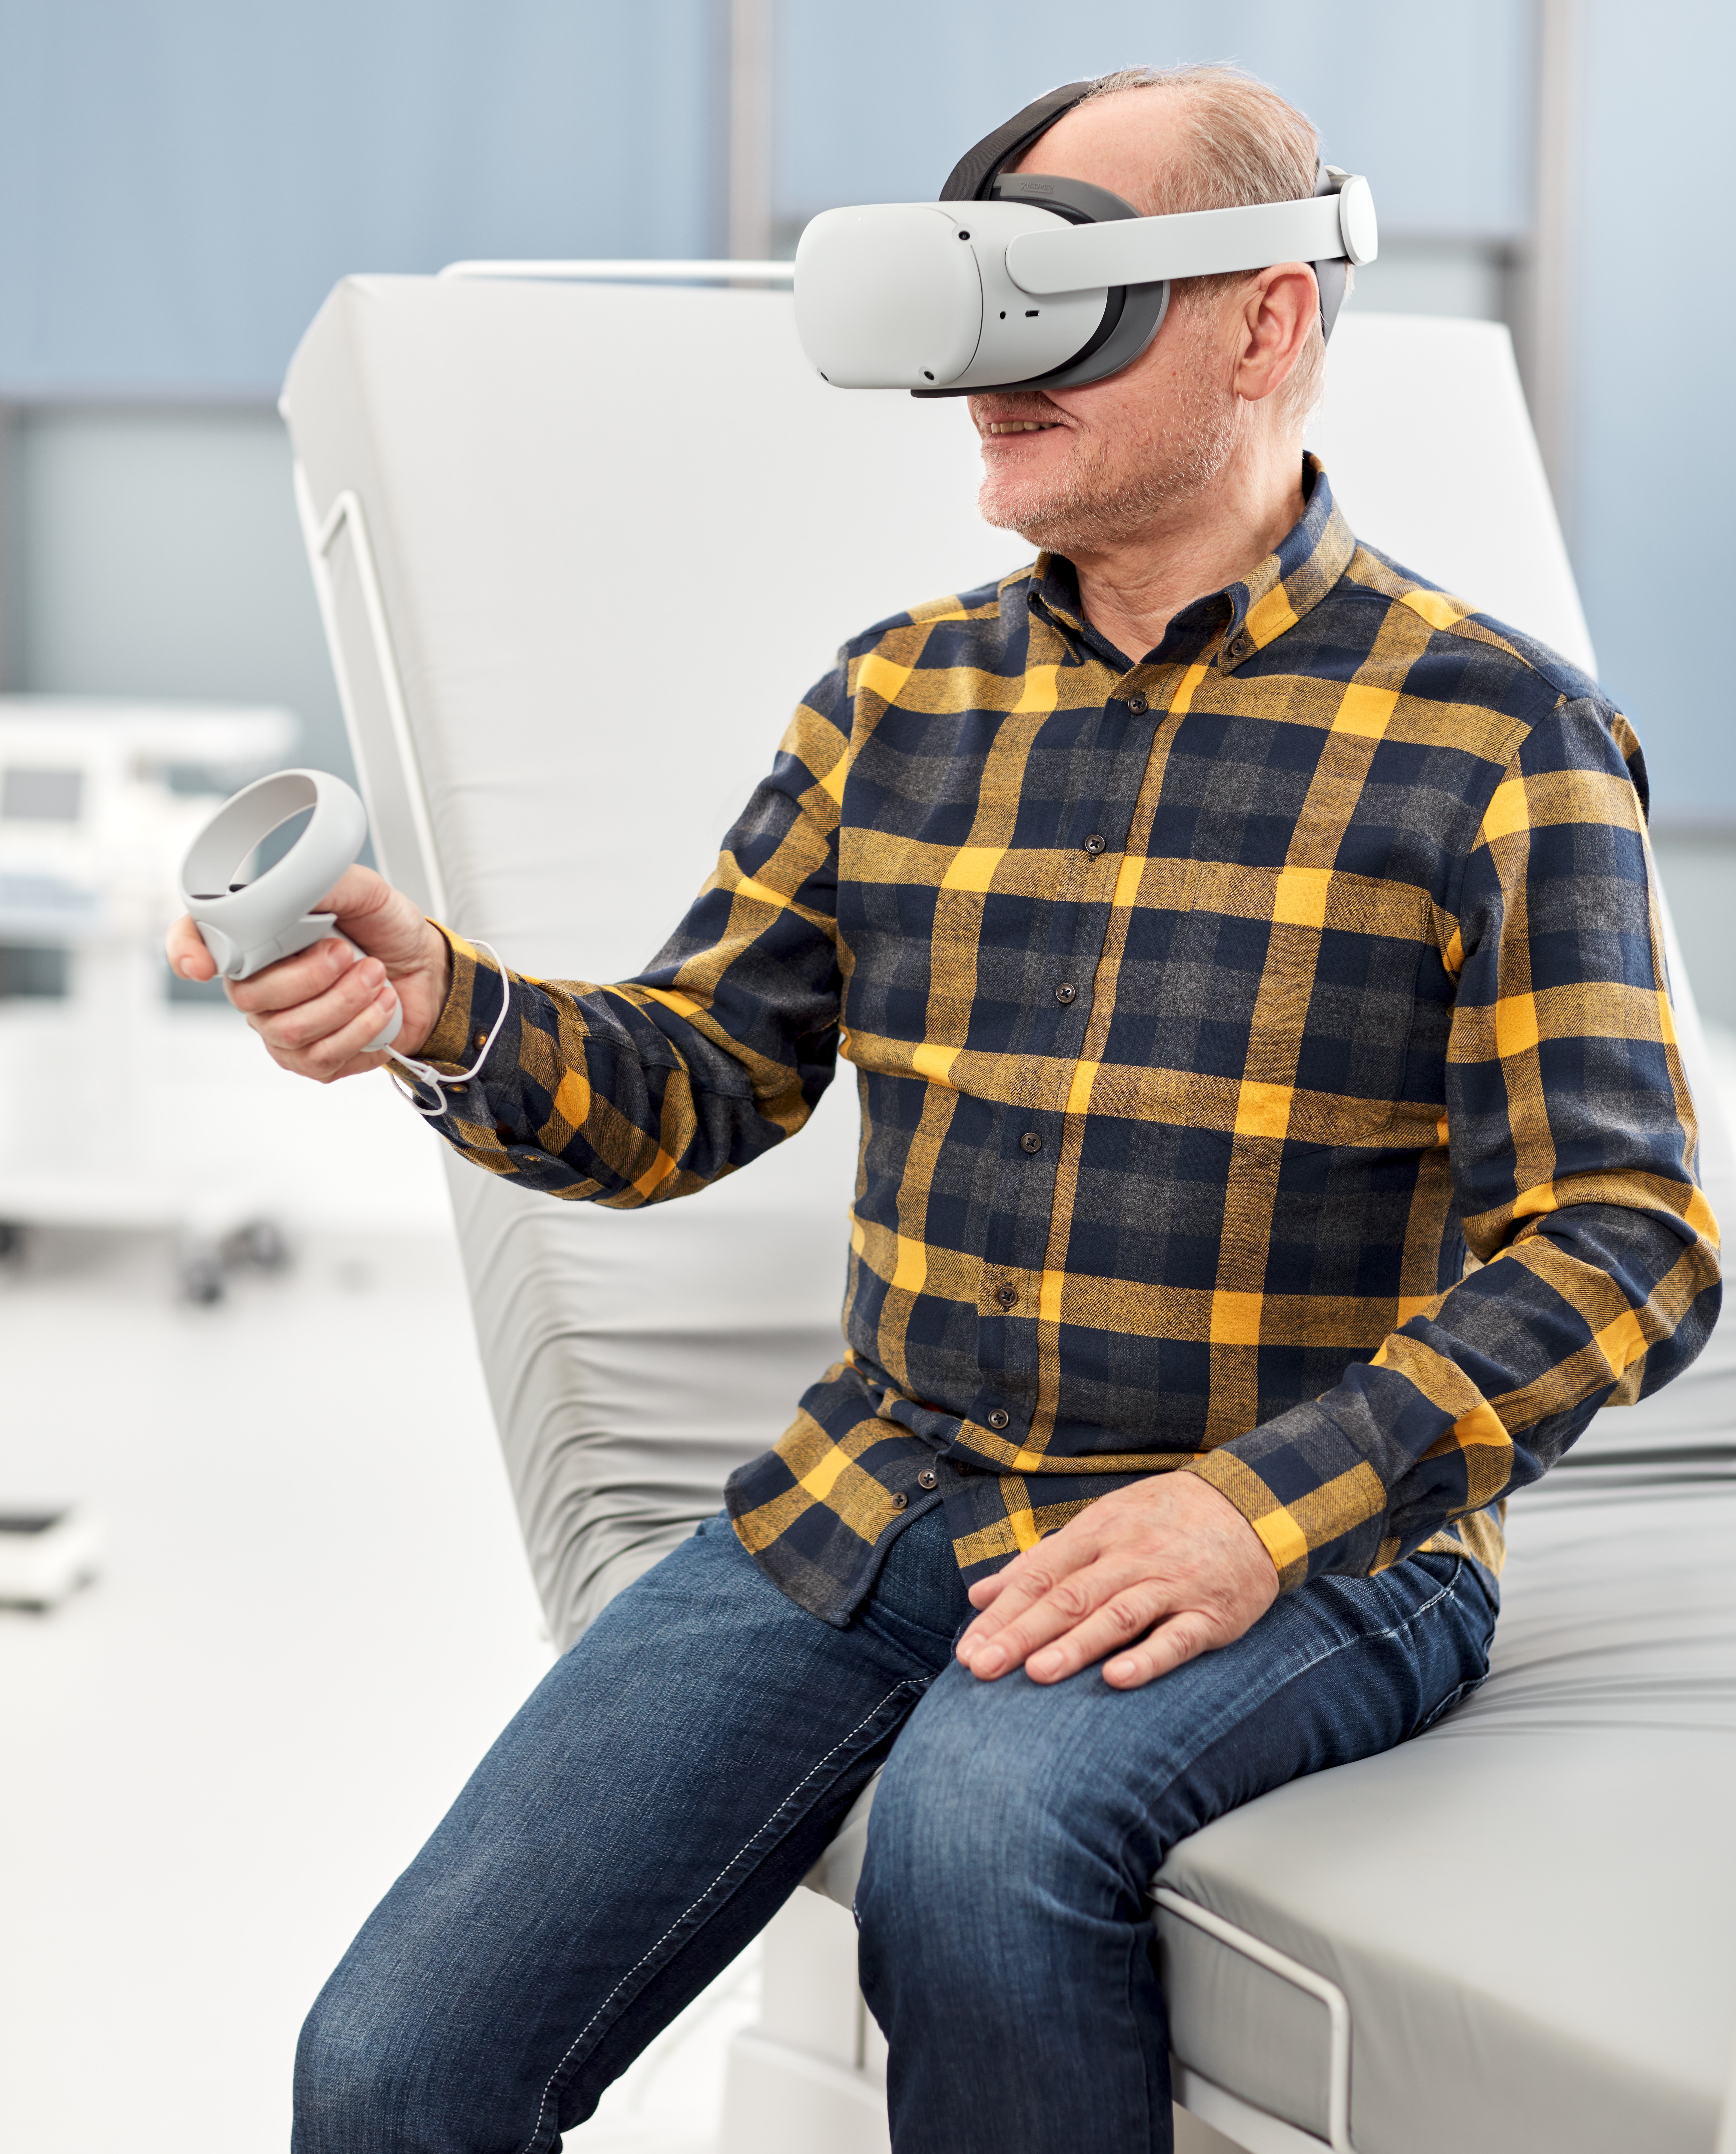 Patientenschulung mit Virtual-Reality-Technik im Krankenhaus